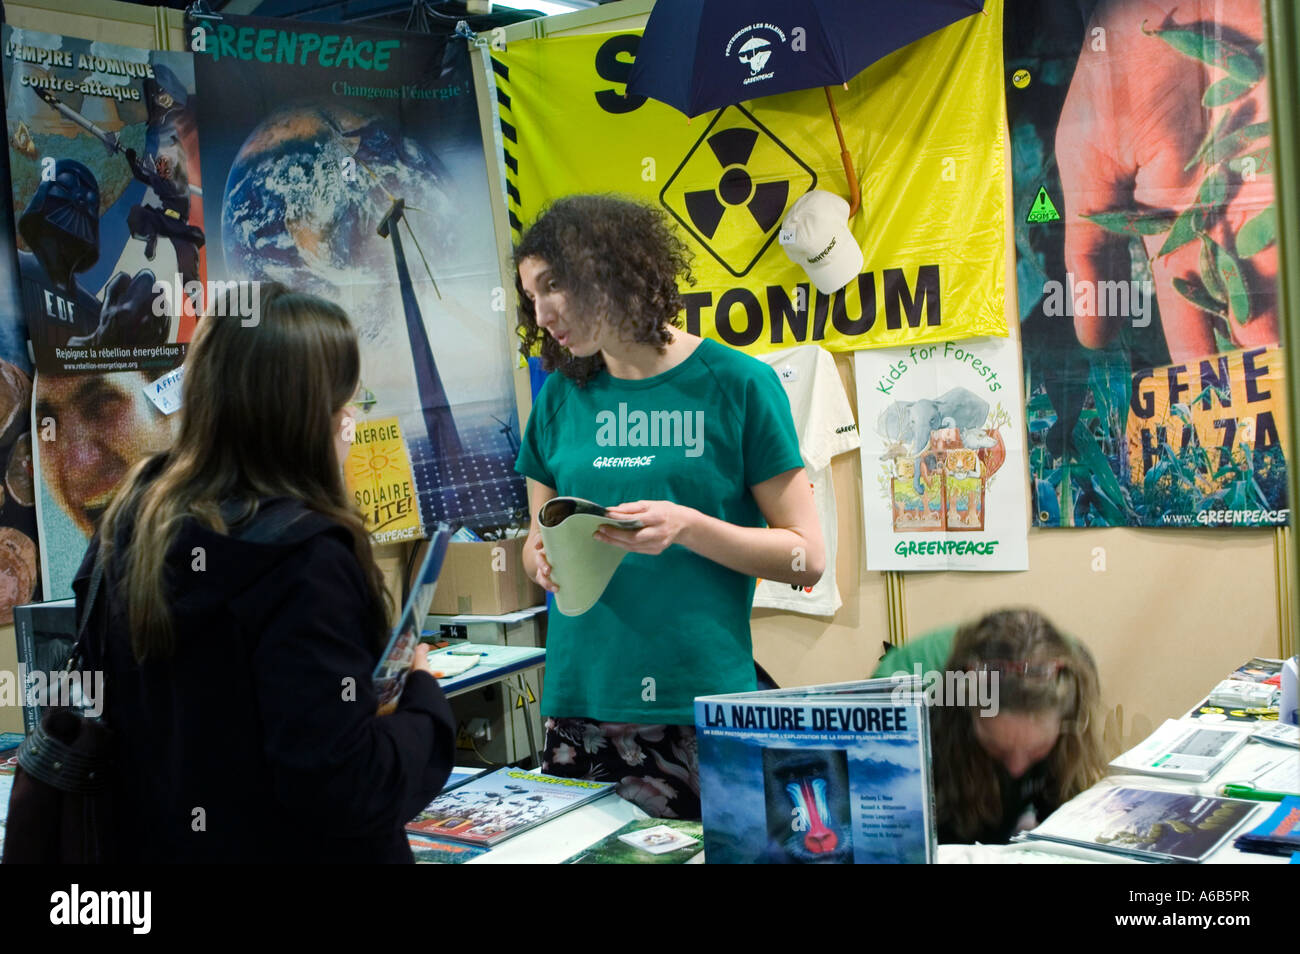 Parigi Francia, Greenpeace Exhibit al 'Trade Show' Two Women Talking Environmental Activism, volontariato Foire Exposition Foto Stock